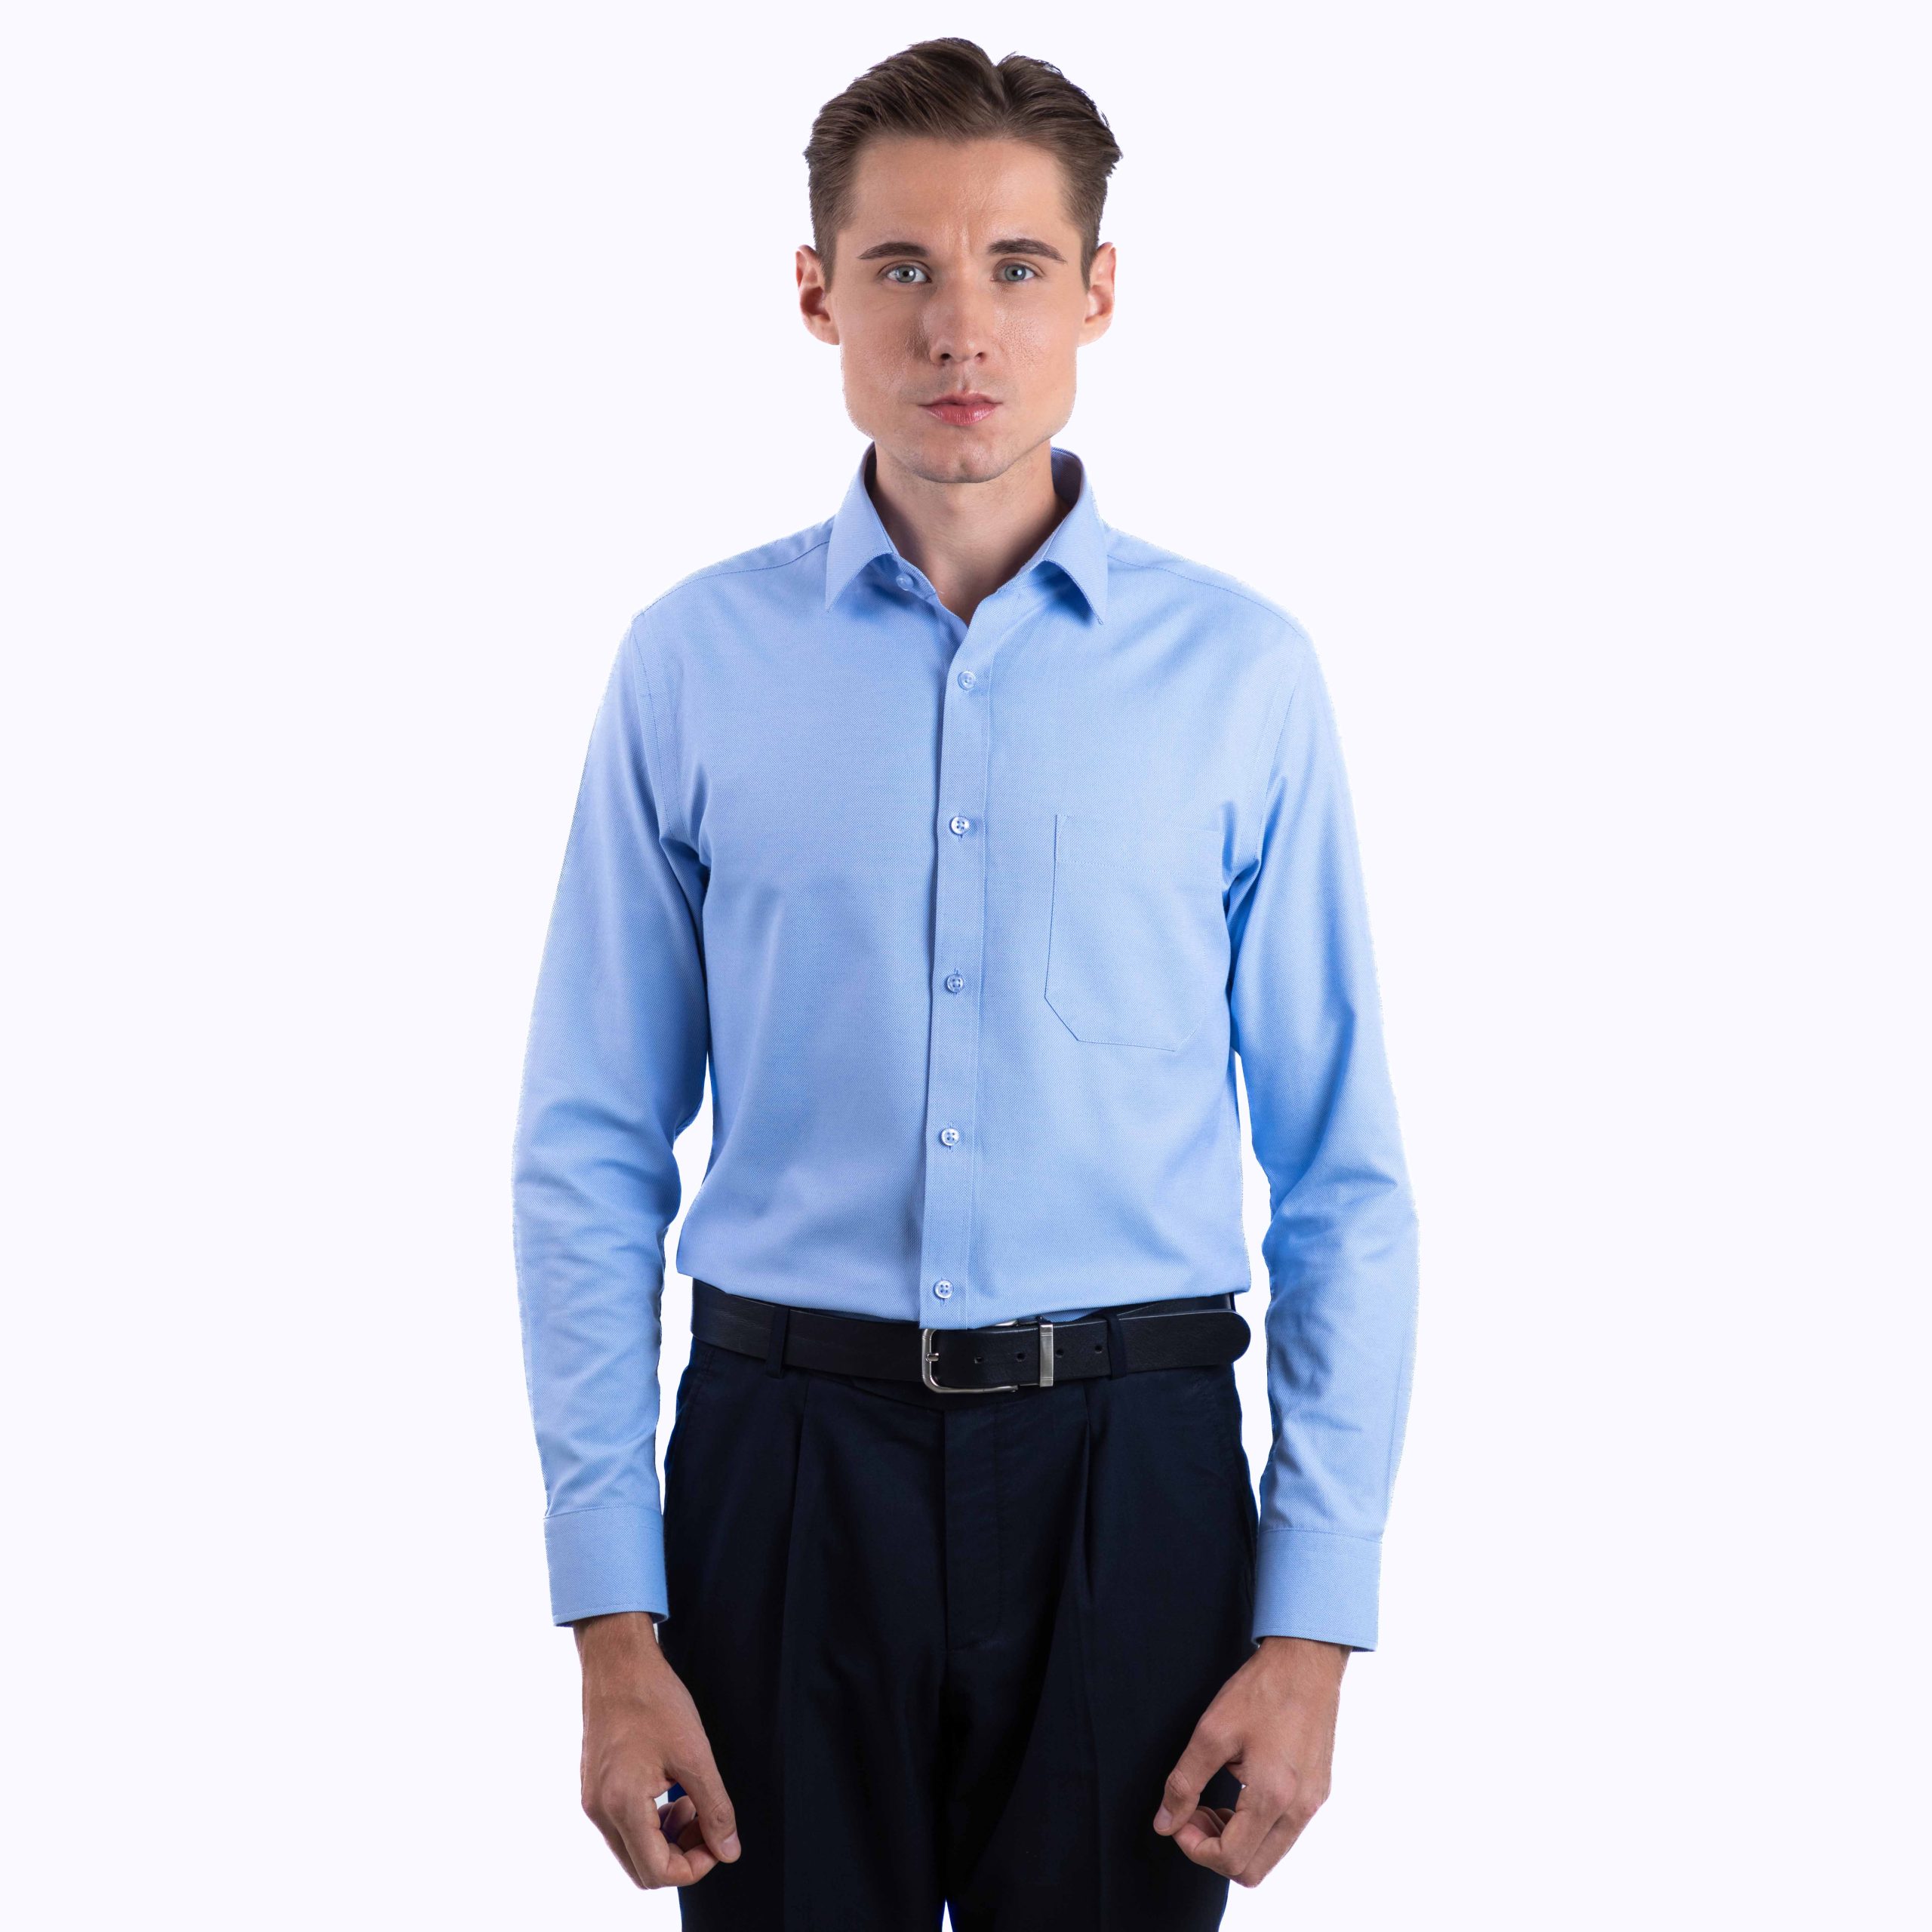 Blue Royal Oxford Shirt - Bluefort